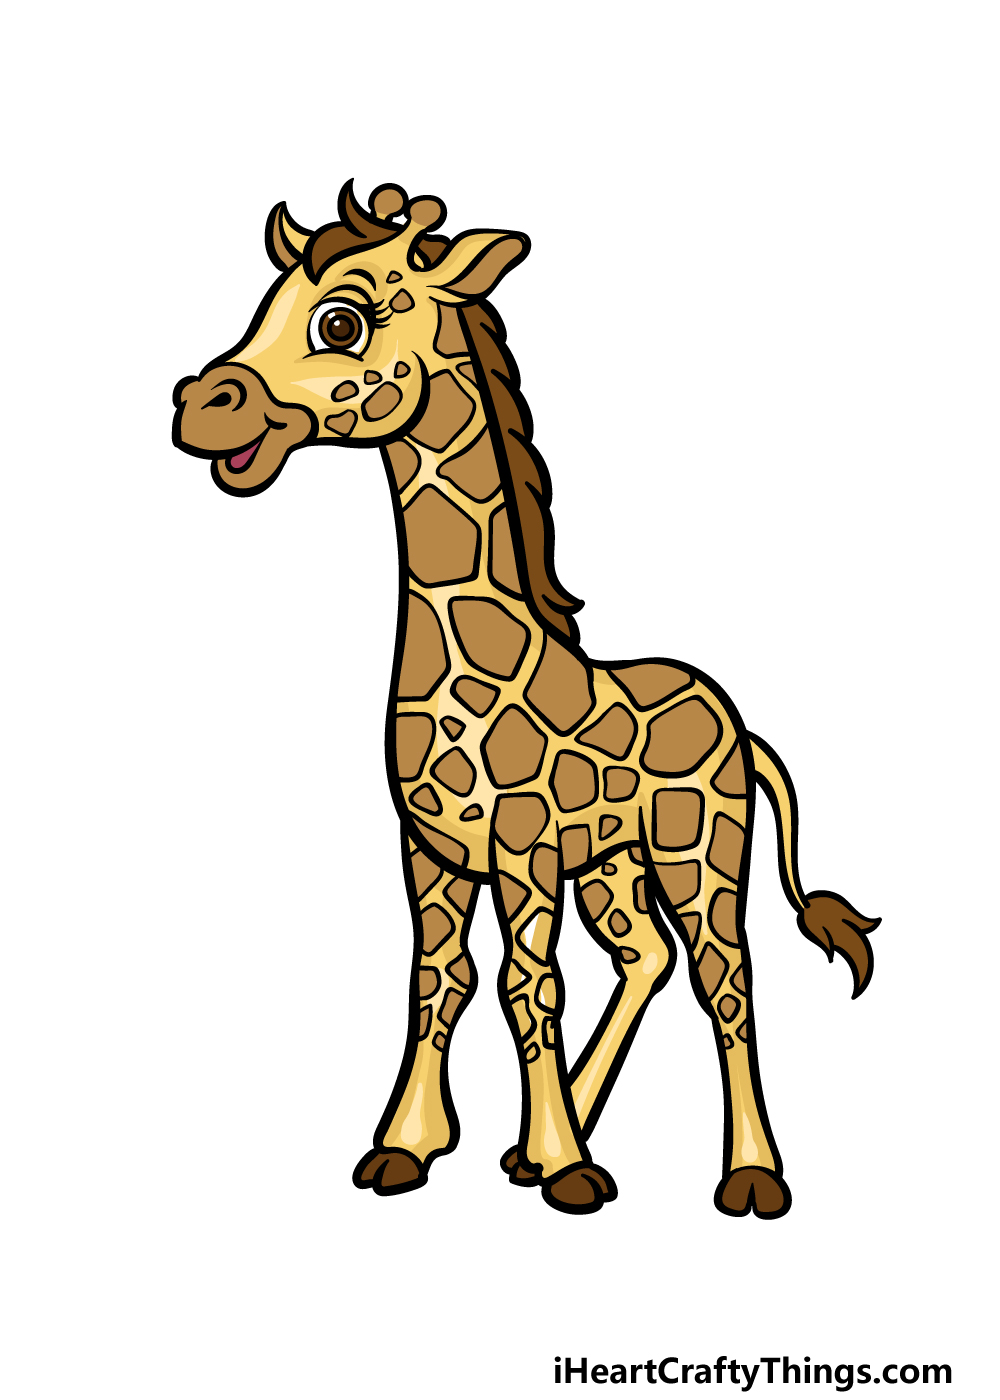 Cartoon Giraffe Drawing - How To Draw A Cartoon Giraffe Step By Step